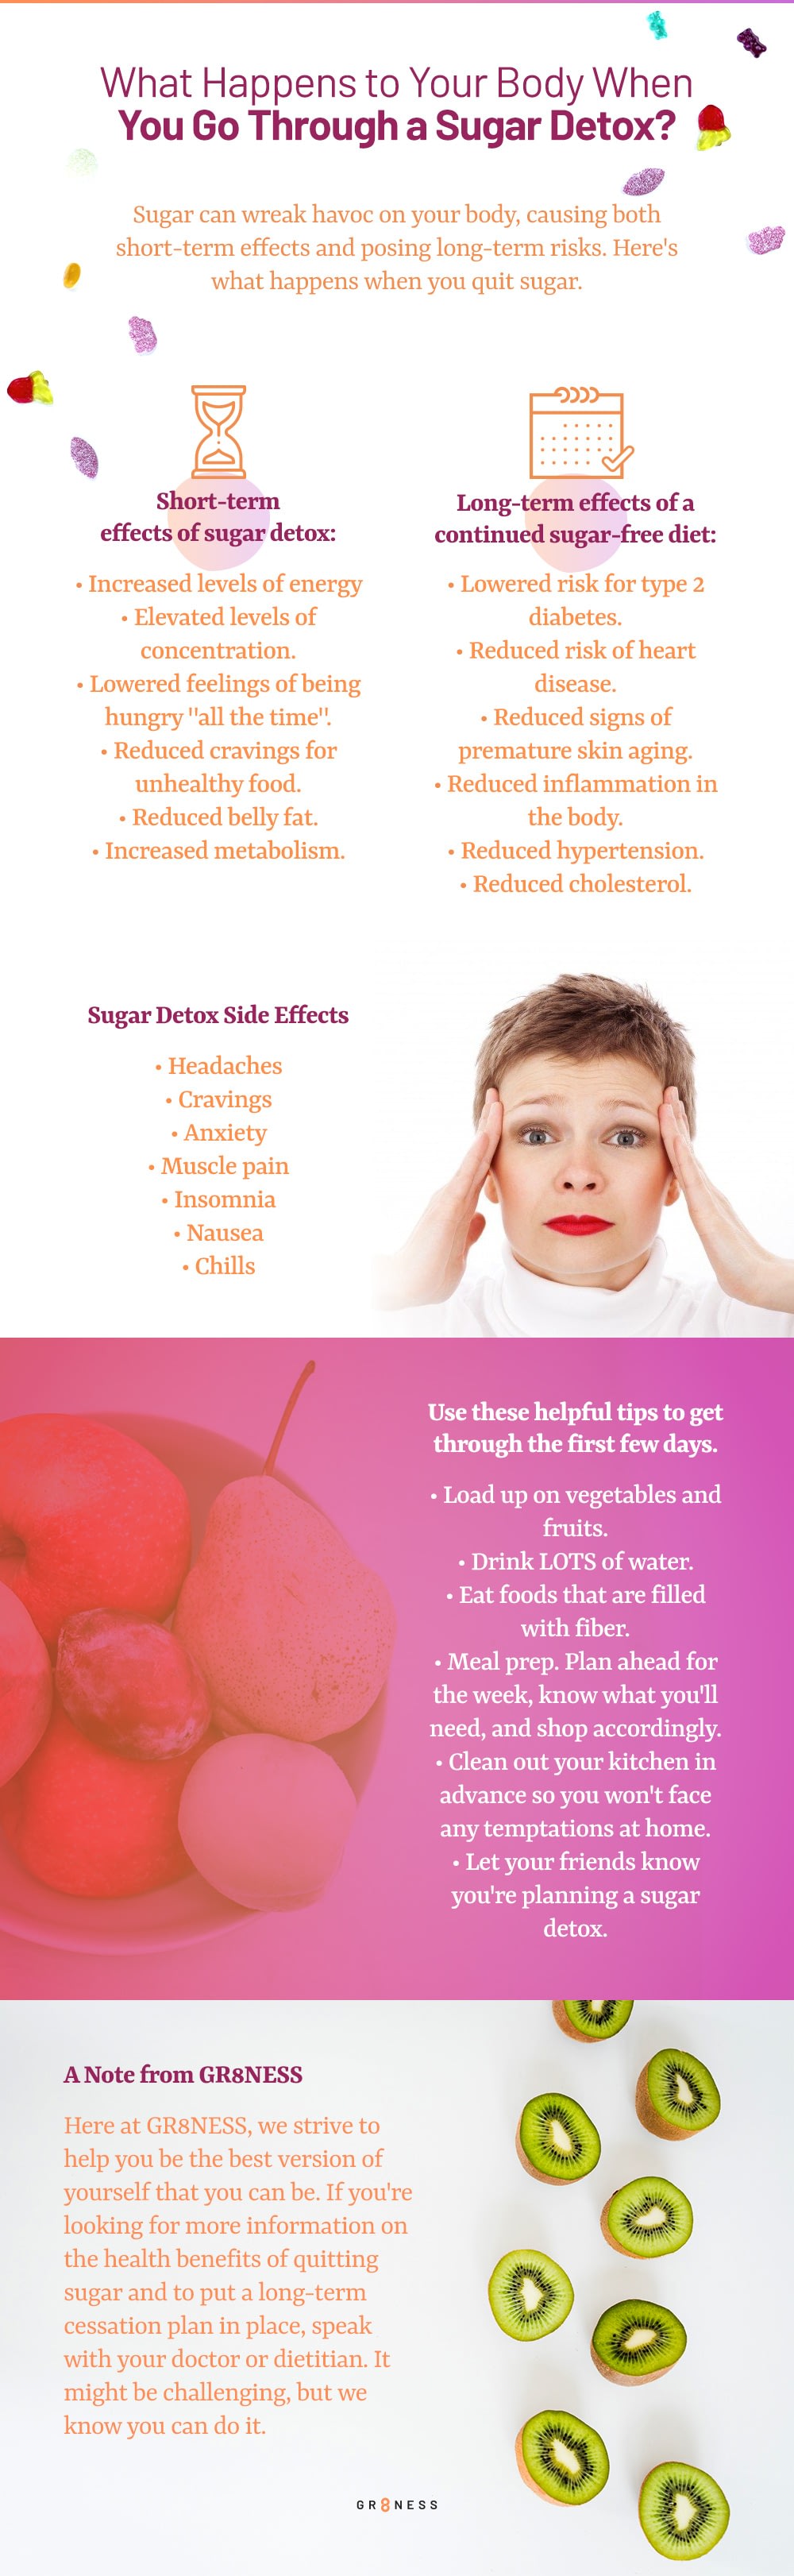 An infographic describing what happens during sugar detox